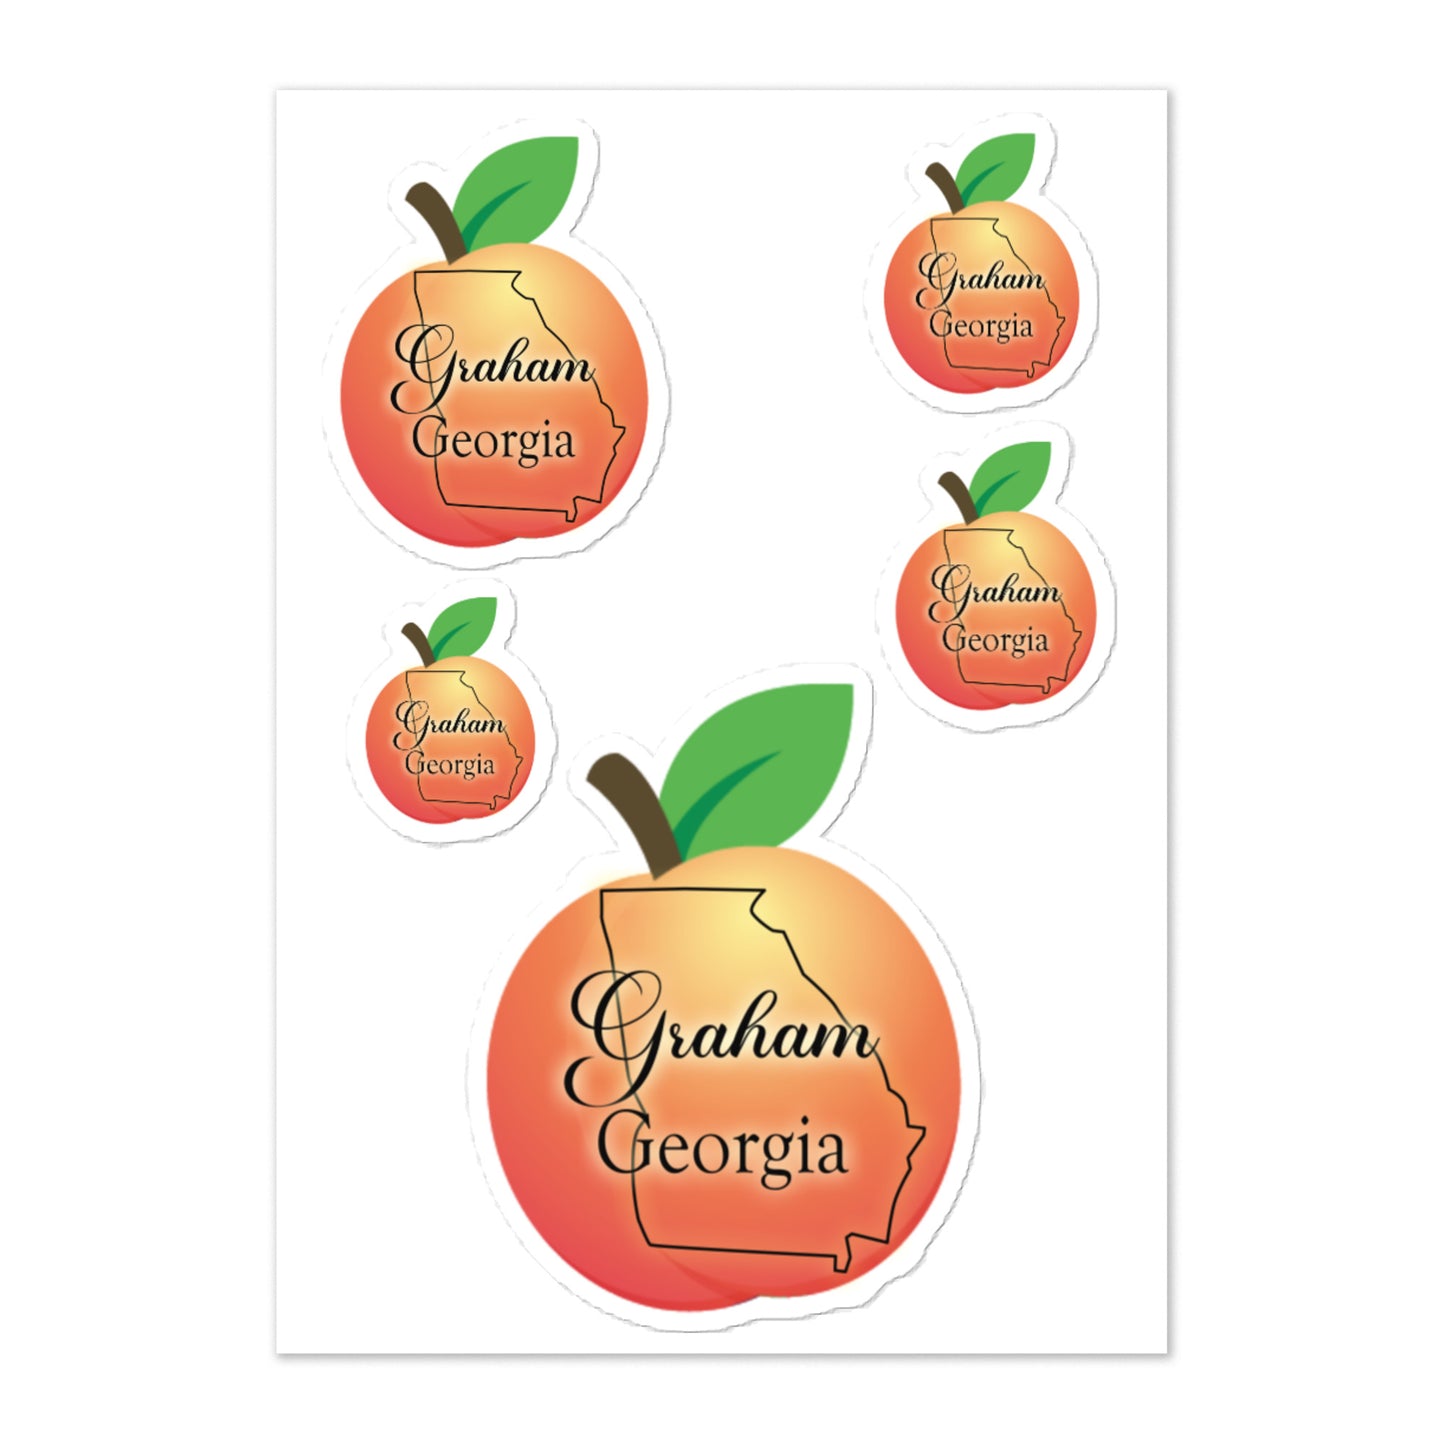 Graham Georgia - State Outline Sticker Sheet